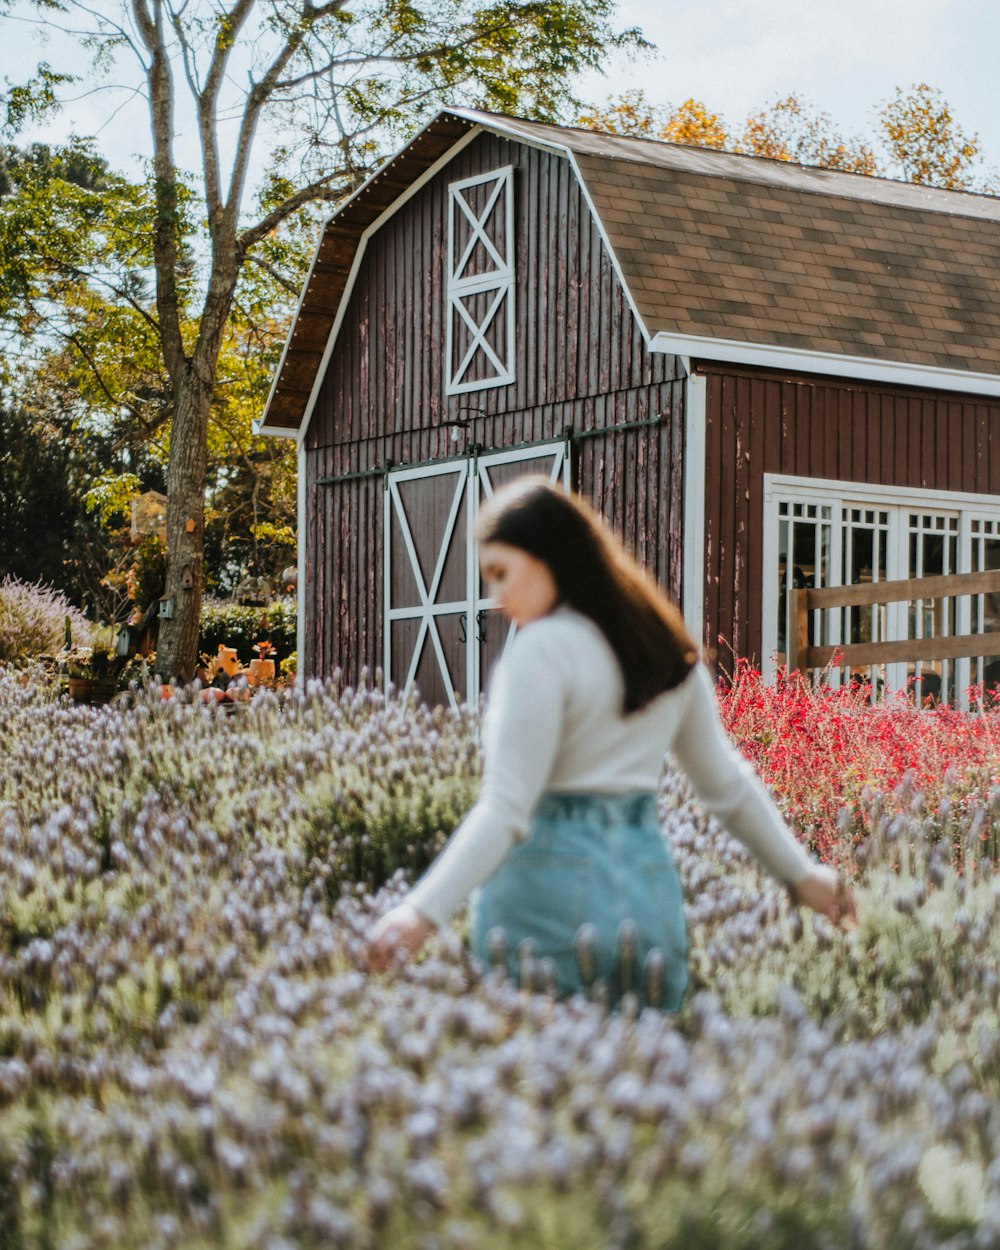 a woman walking through a field of flowers